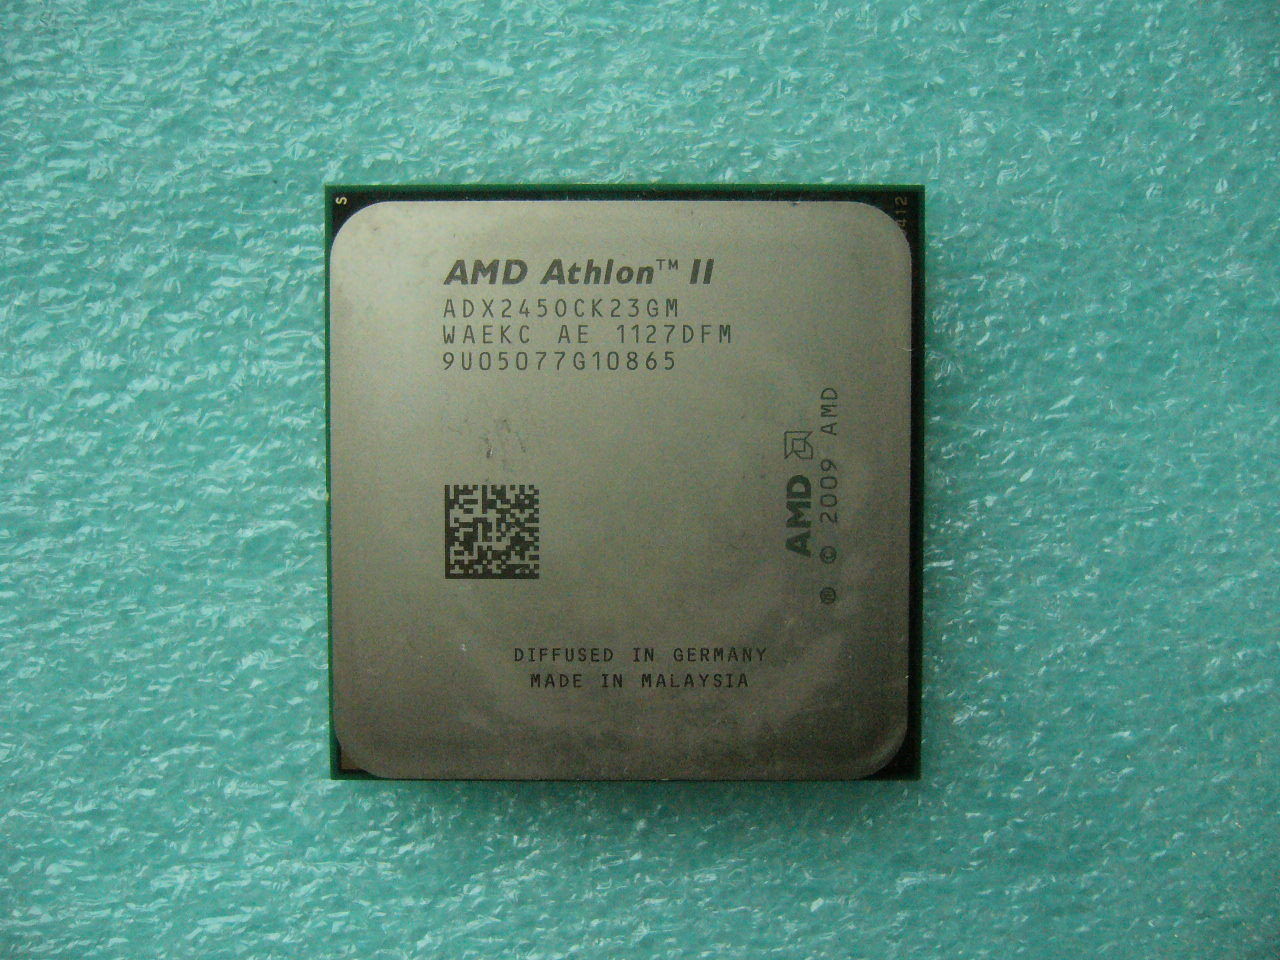 QTY 1x AMD Athlon II X2 245 2.9 GHz Dual-Core (ADX245OCK23GM) CPU Socket AM3